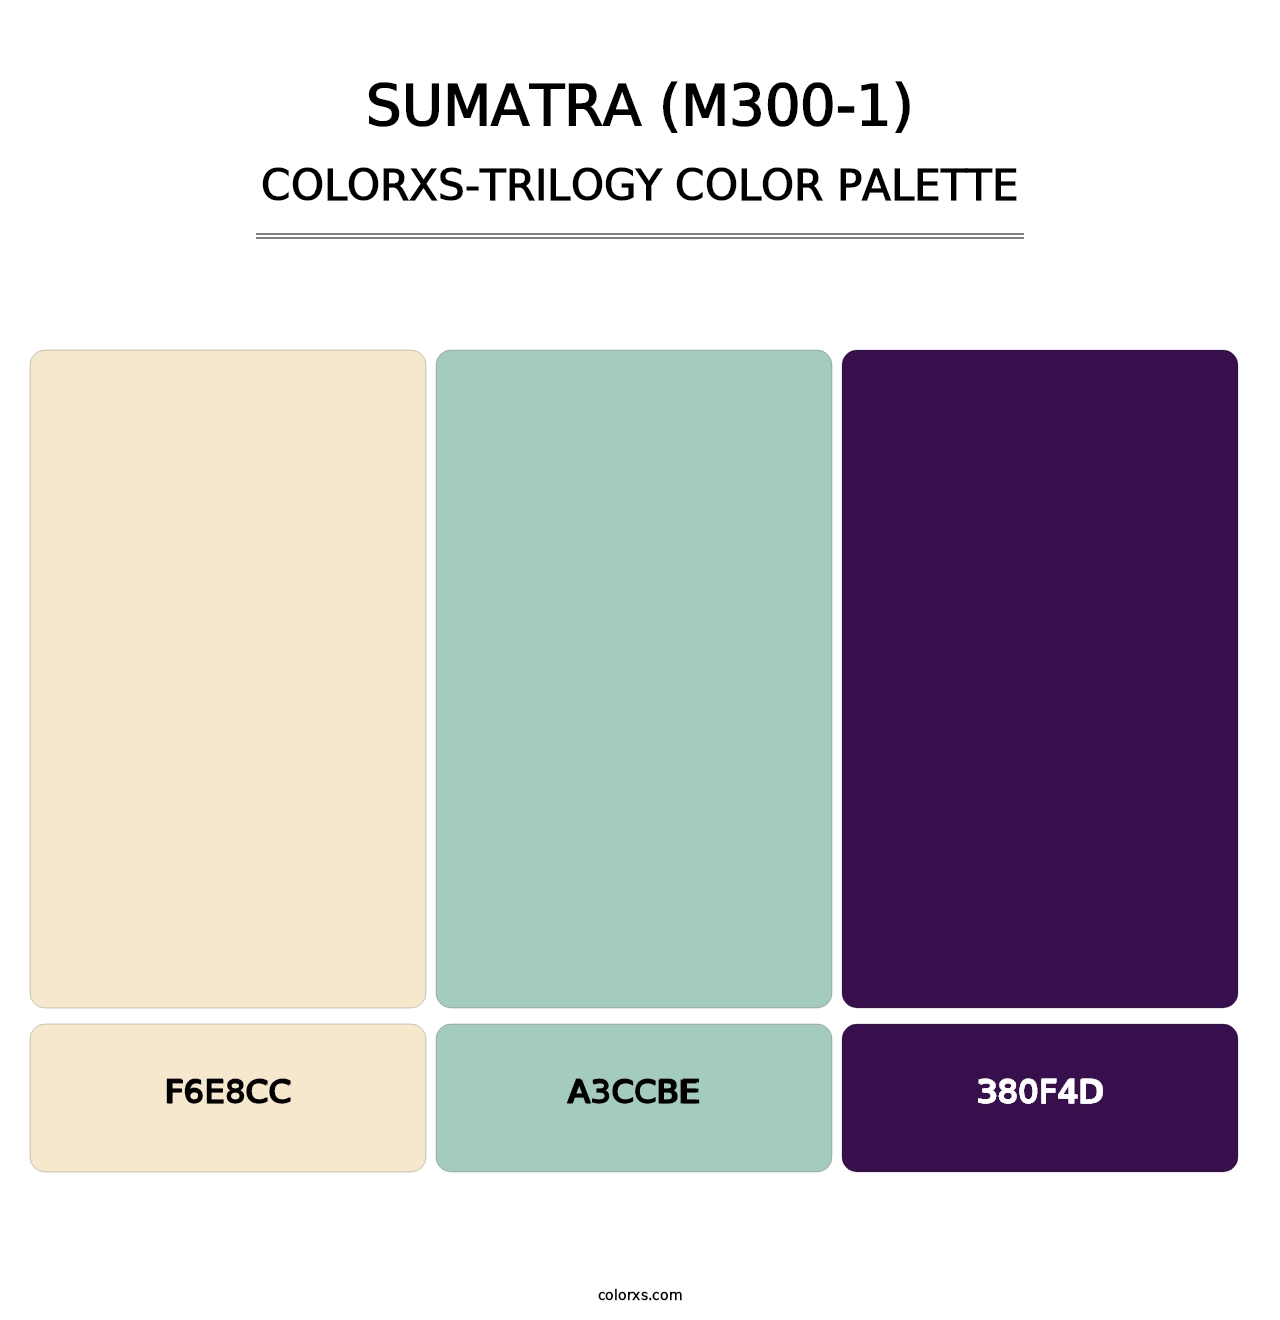 Sumatra (M300-1) - Colorxs Trilogy Palette